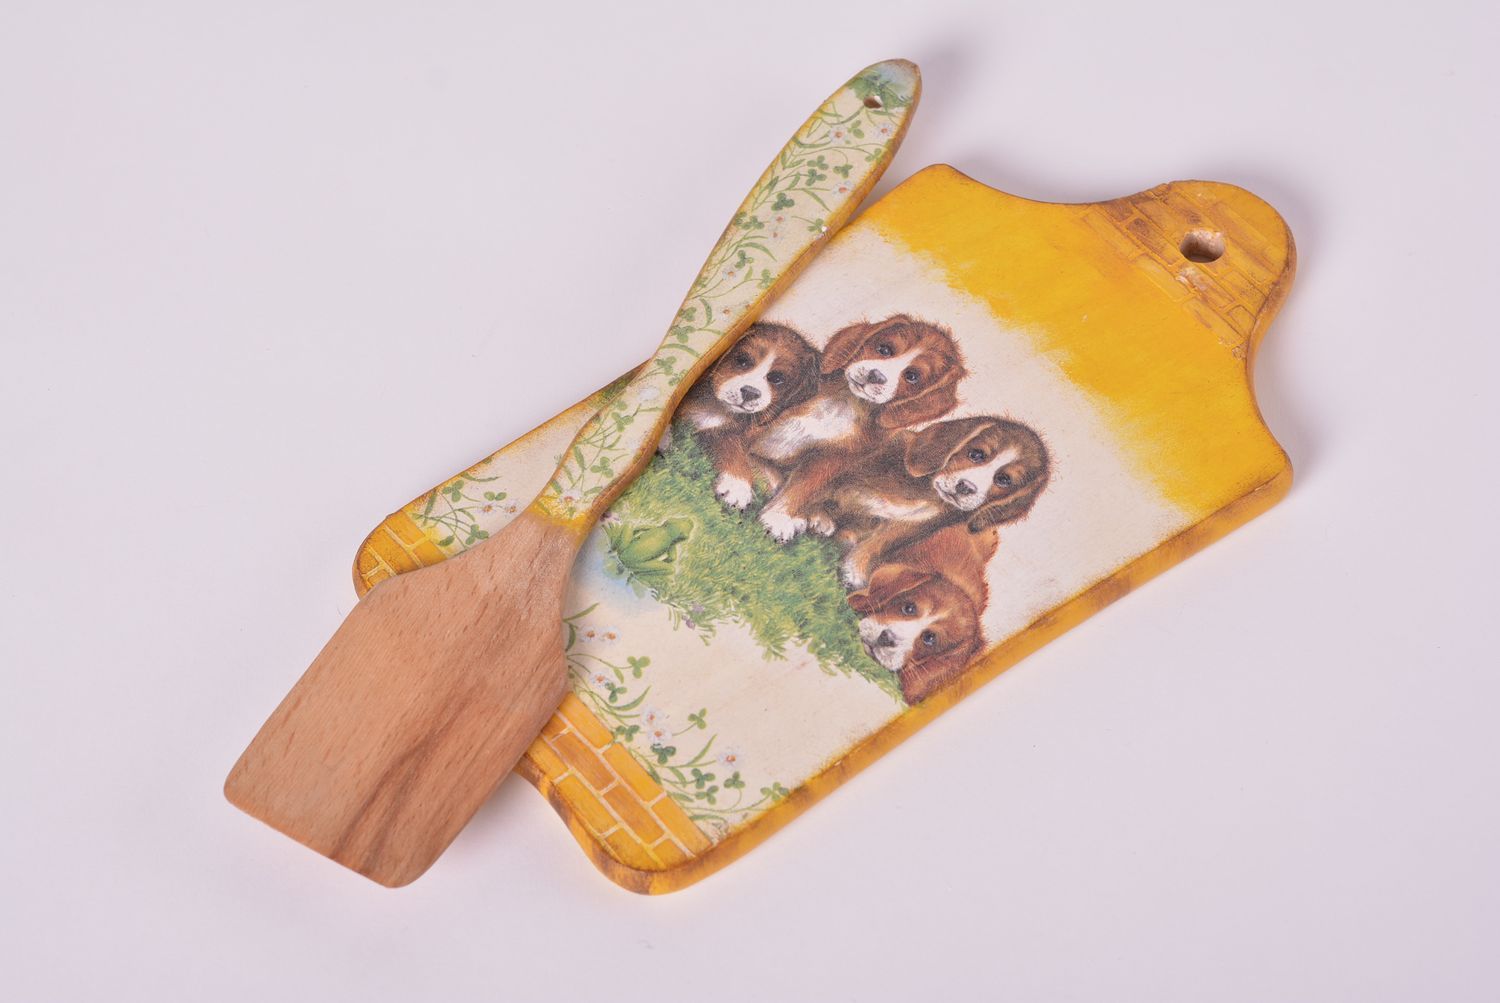 Unusual handmade chopping board wooden spatula kitchen supplies decoupage ideas photo 1